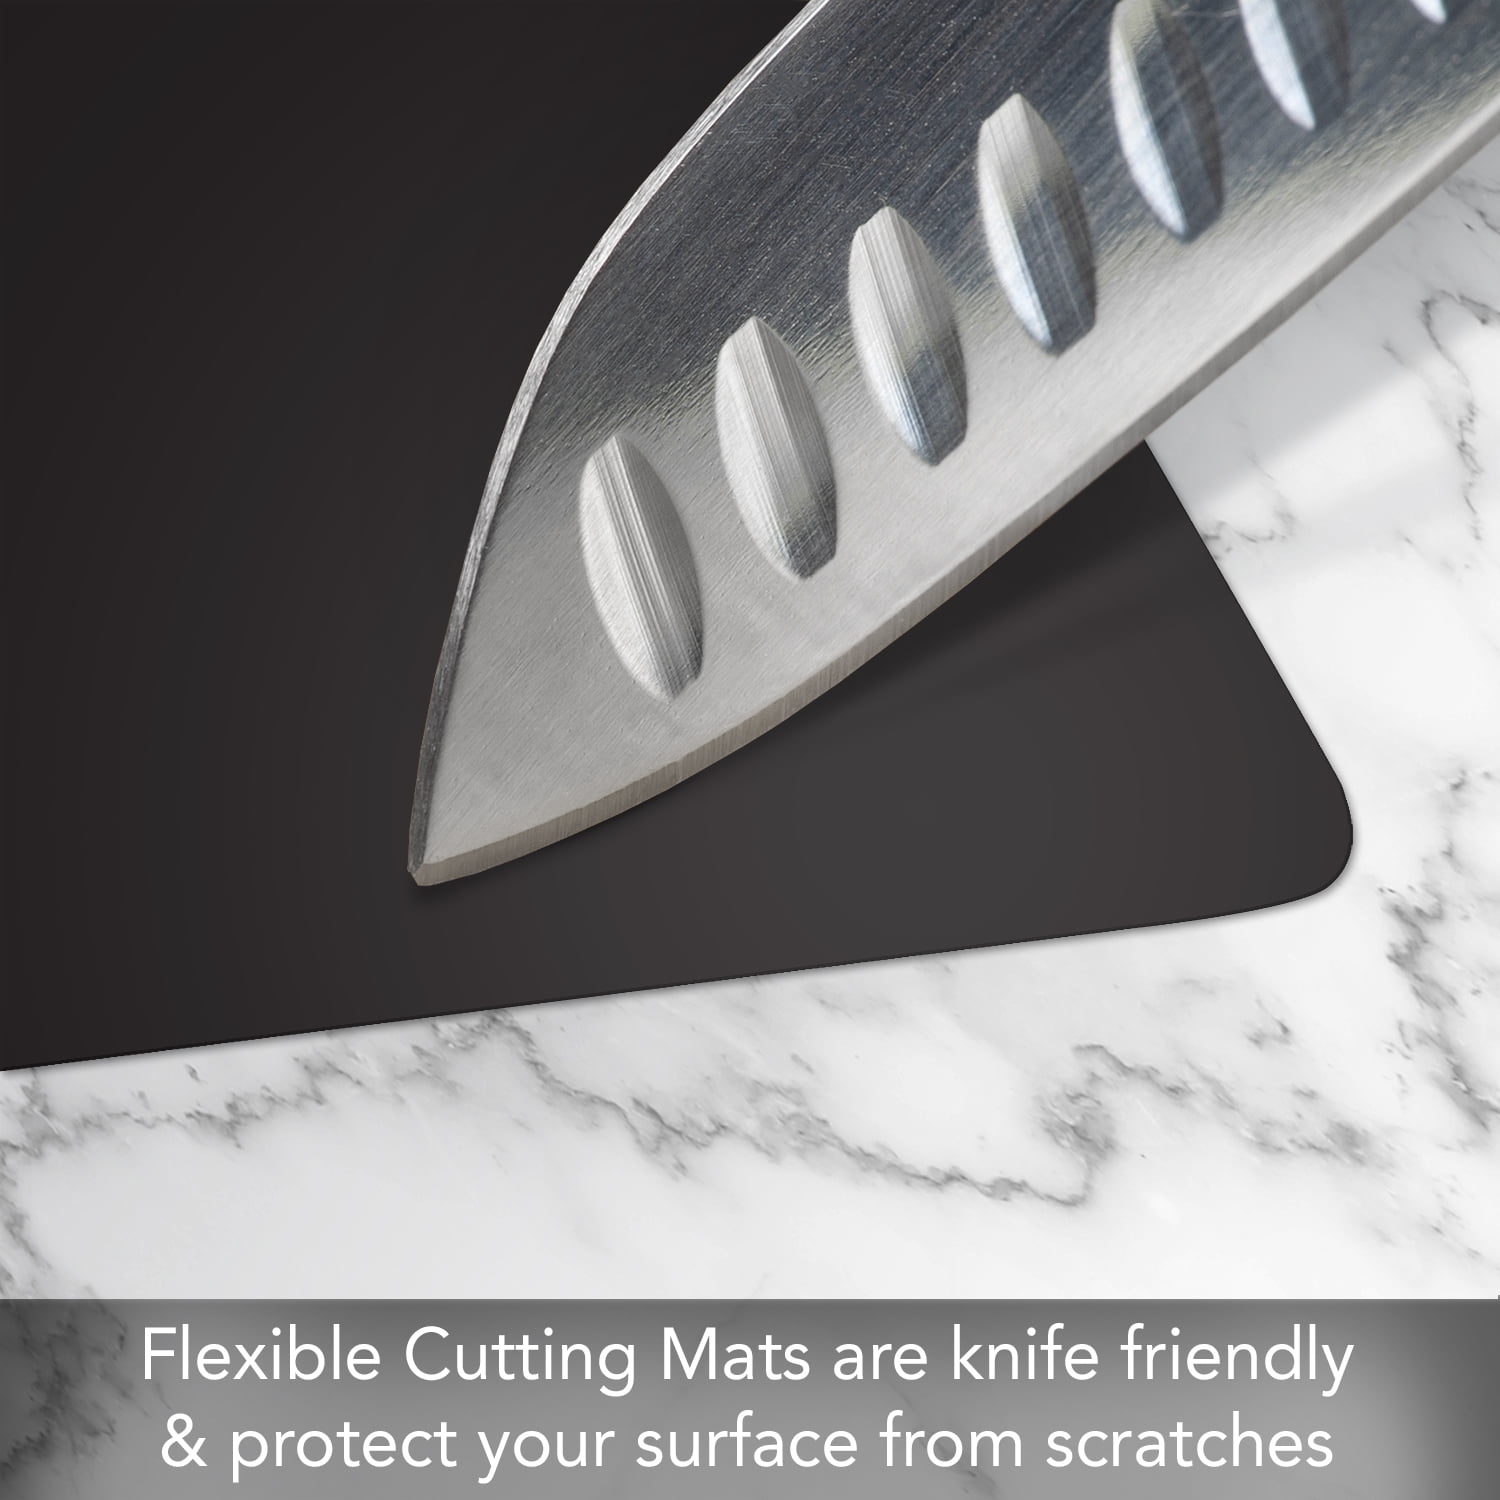 Cut N' Funnel Quartz Designer Flexible Plastic Cutting Board Mat, 1 Pack 15 inch by 11.5 inch, Size: 15 x 11.5 x 0.04